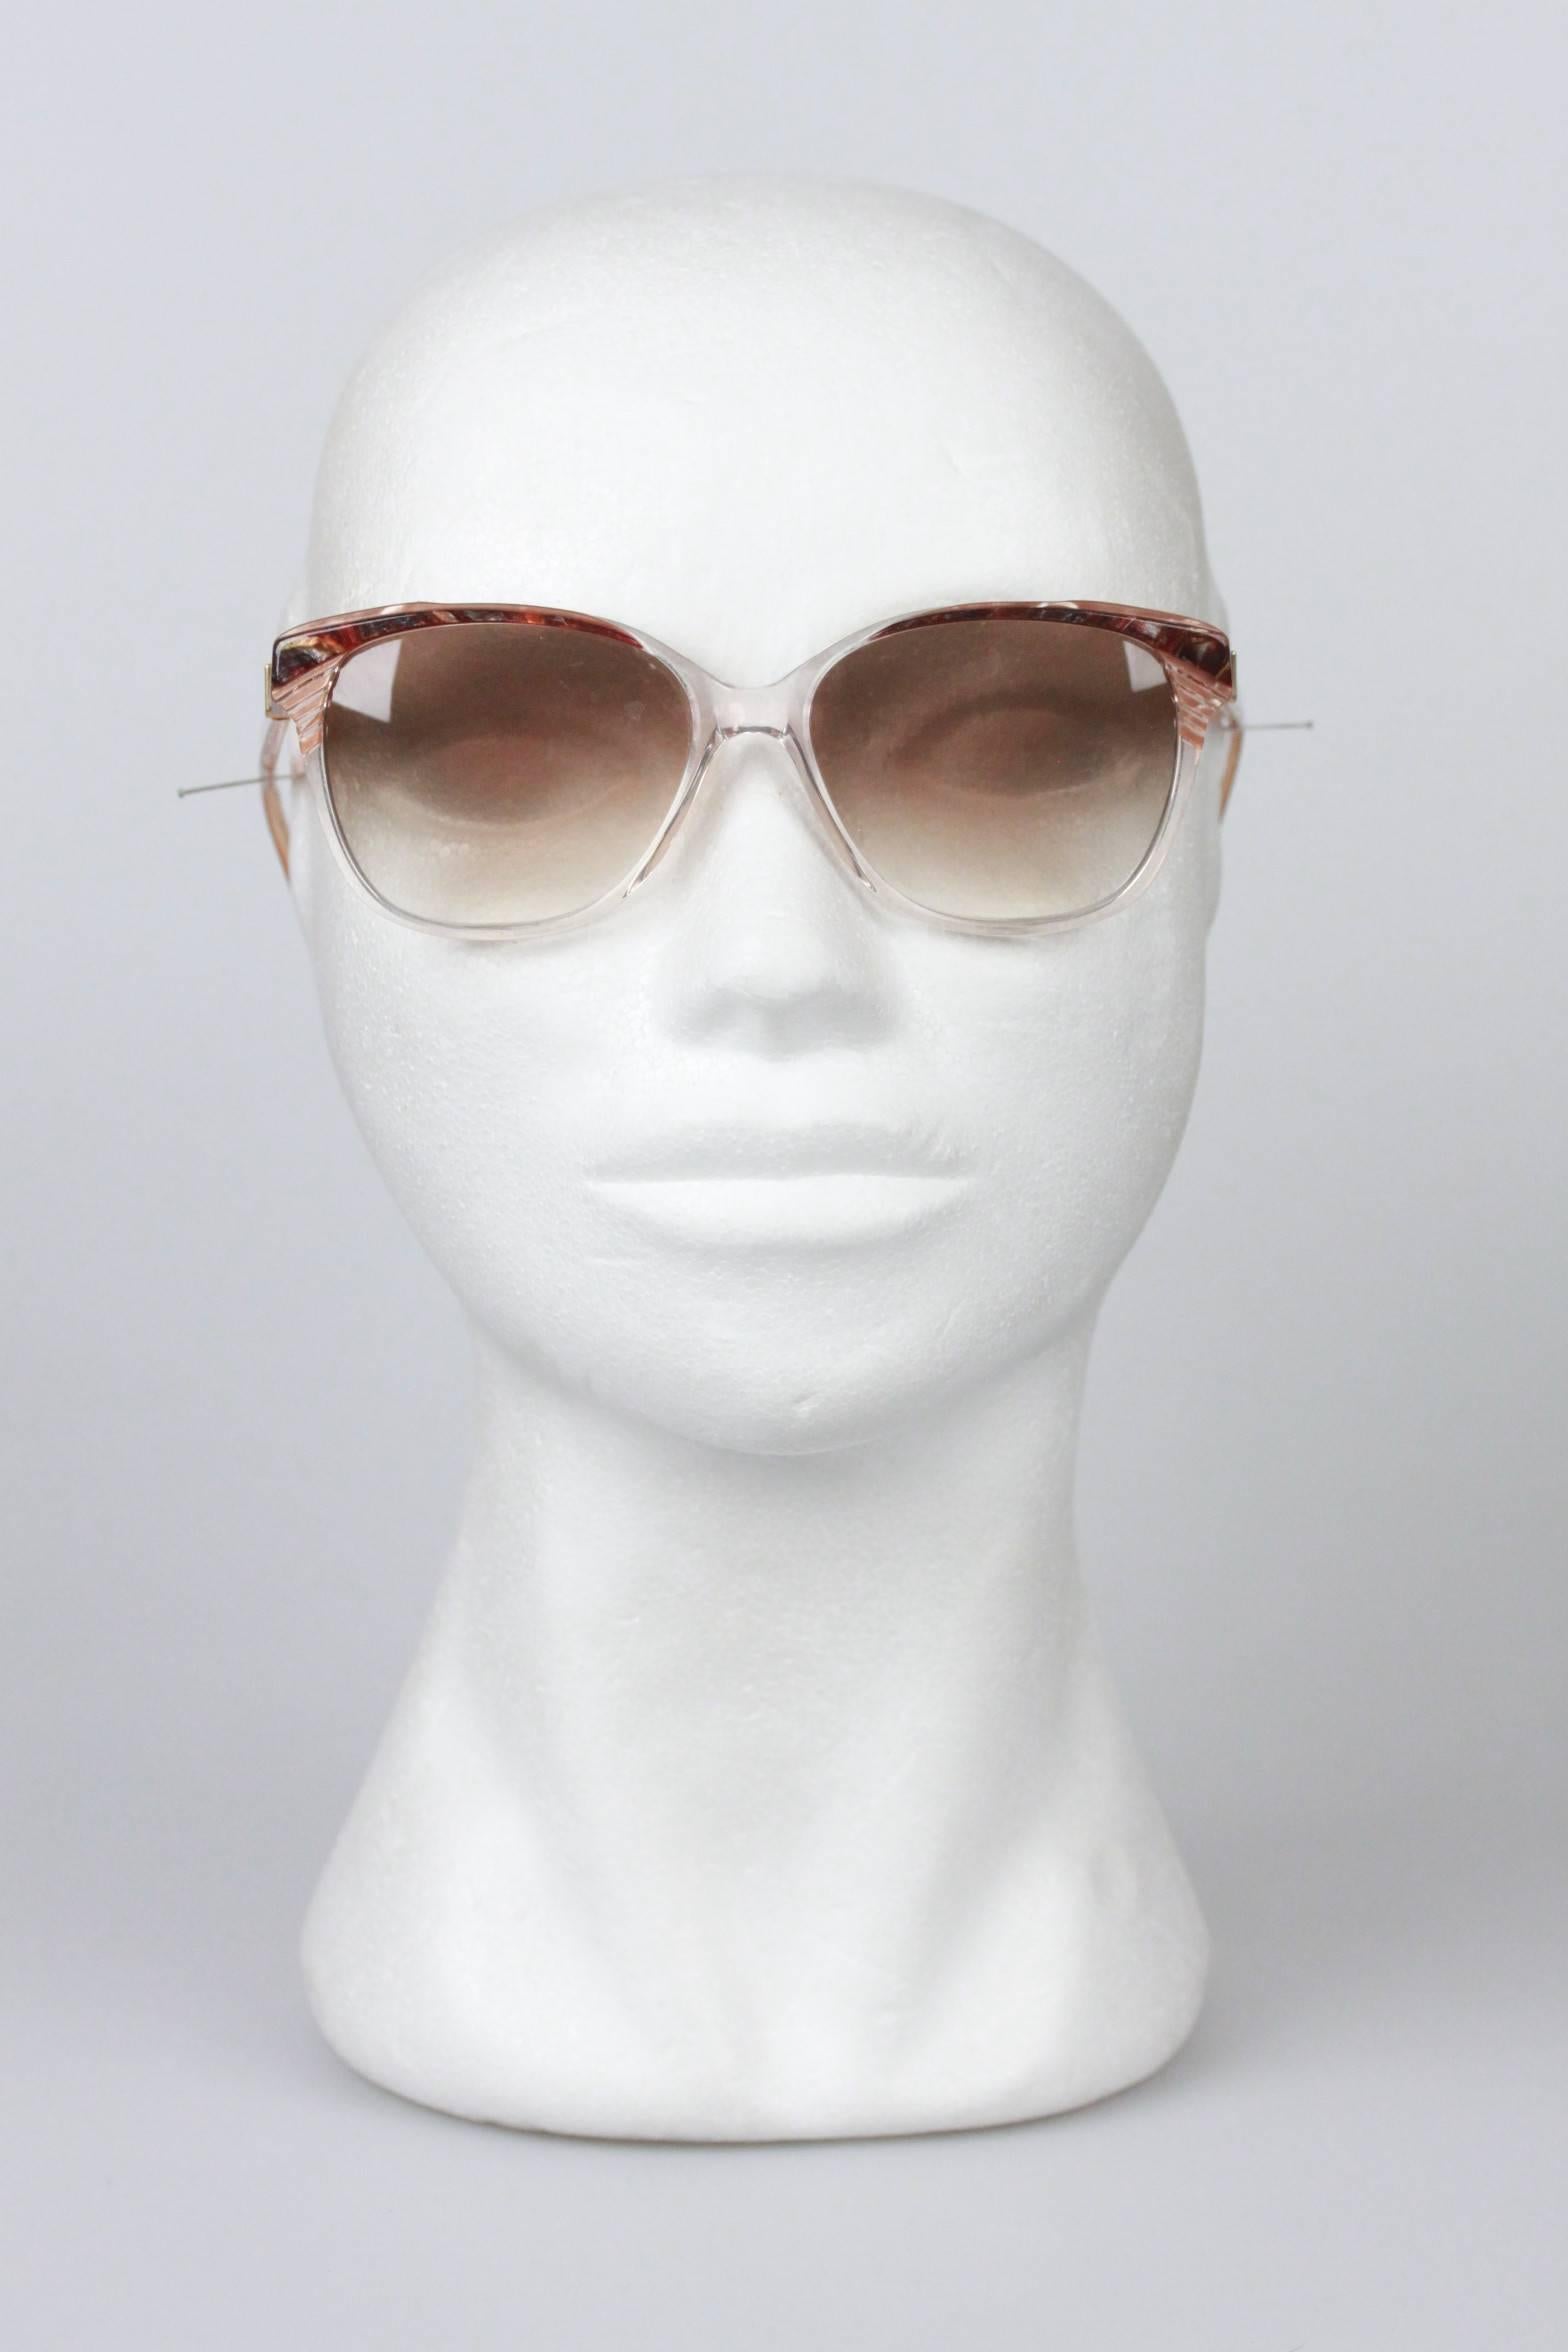 Yves Saint Laurent Vintage Sunglasses Sophocle 783 54mm Frame France 1